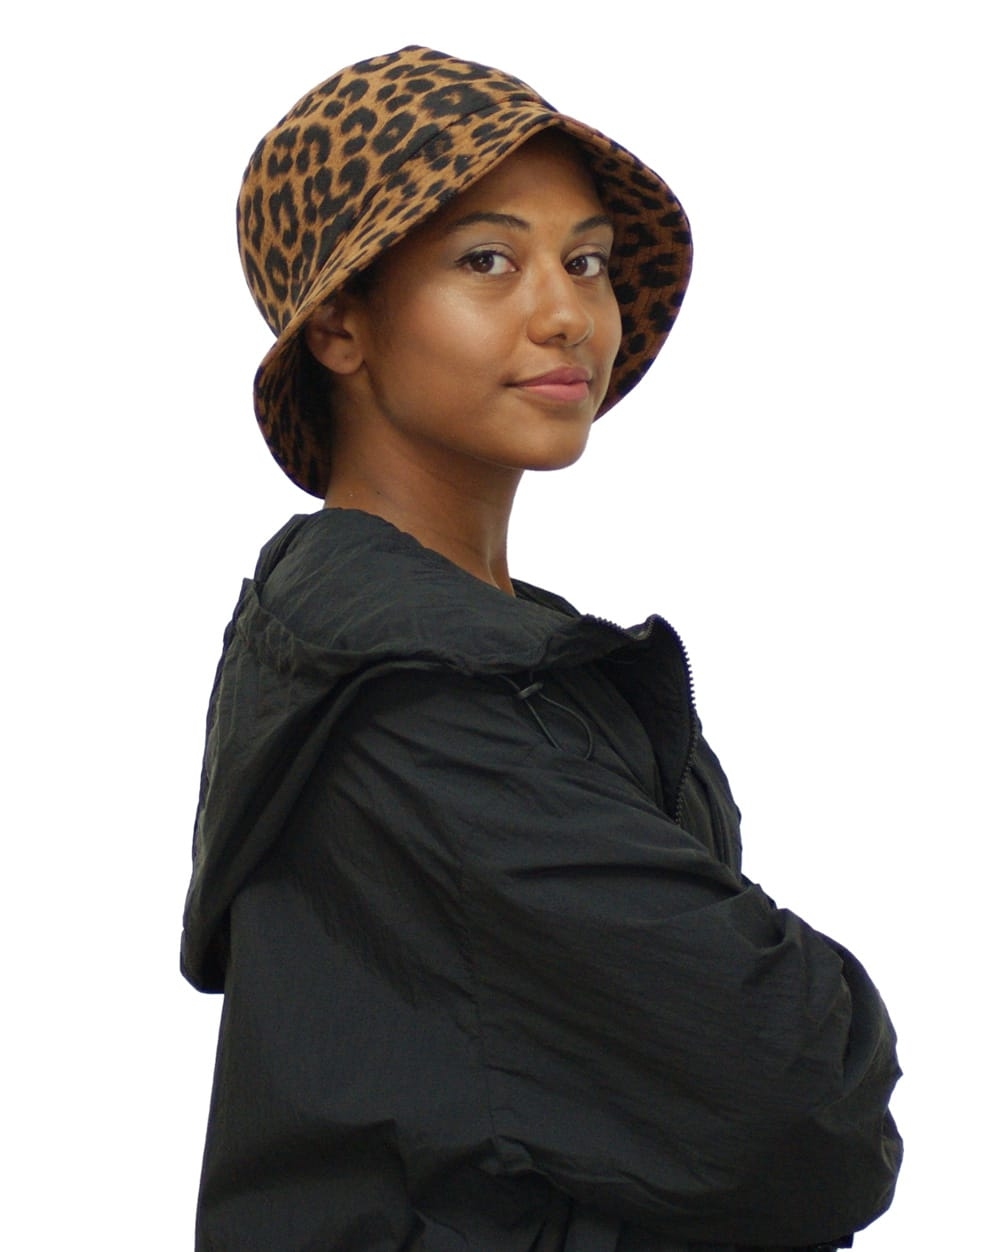 Leopard – Showerproof Hat For Hair Loss – Suburban Turban